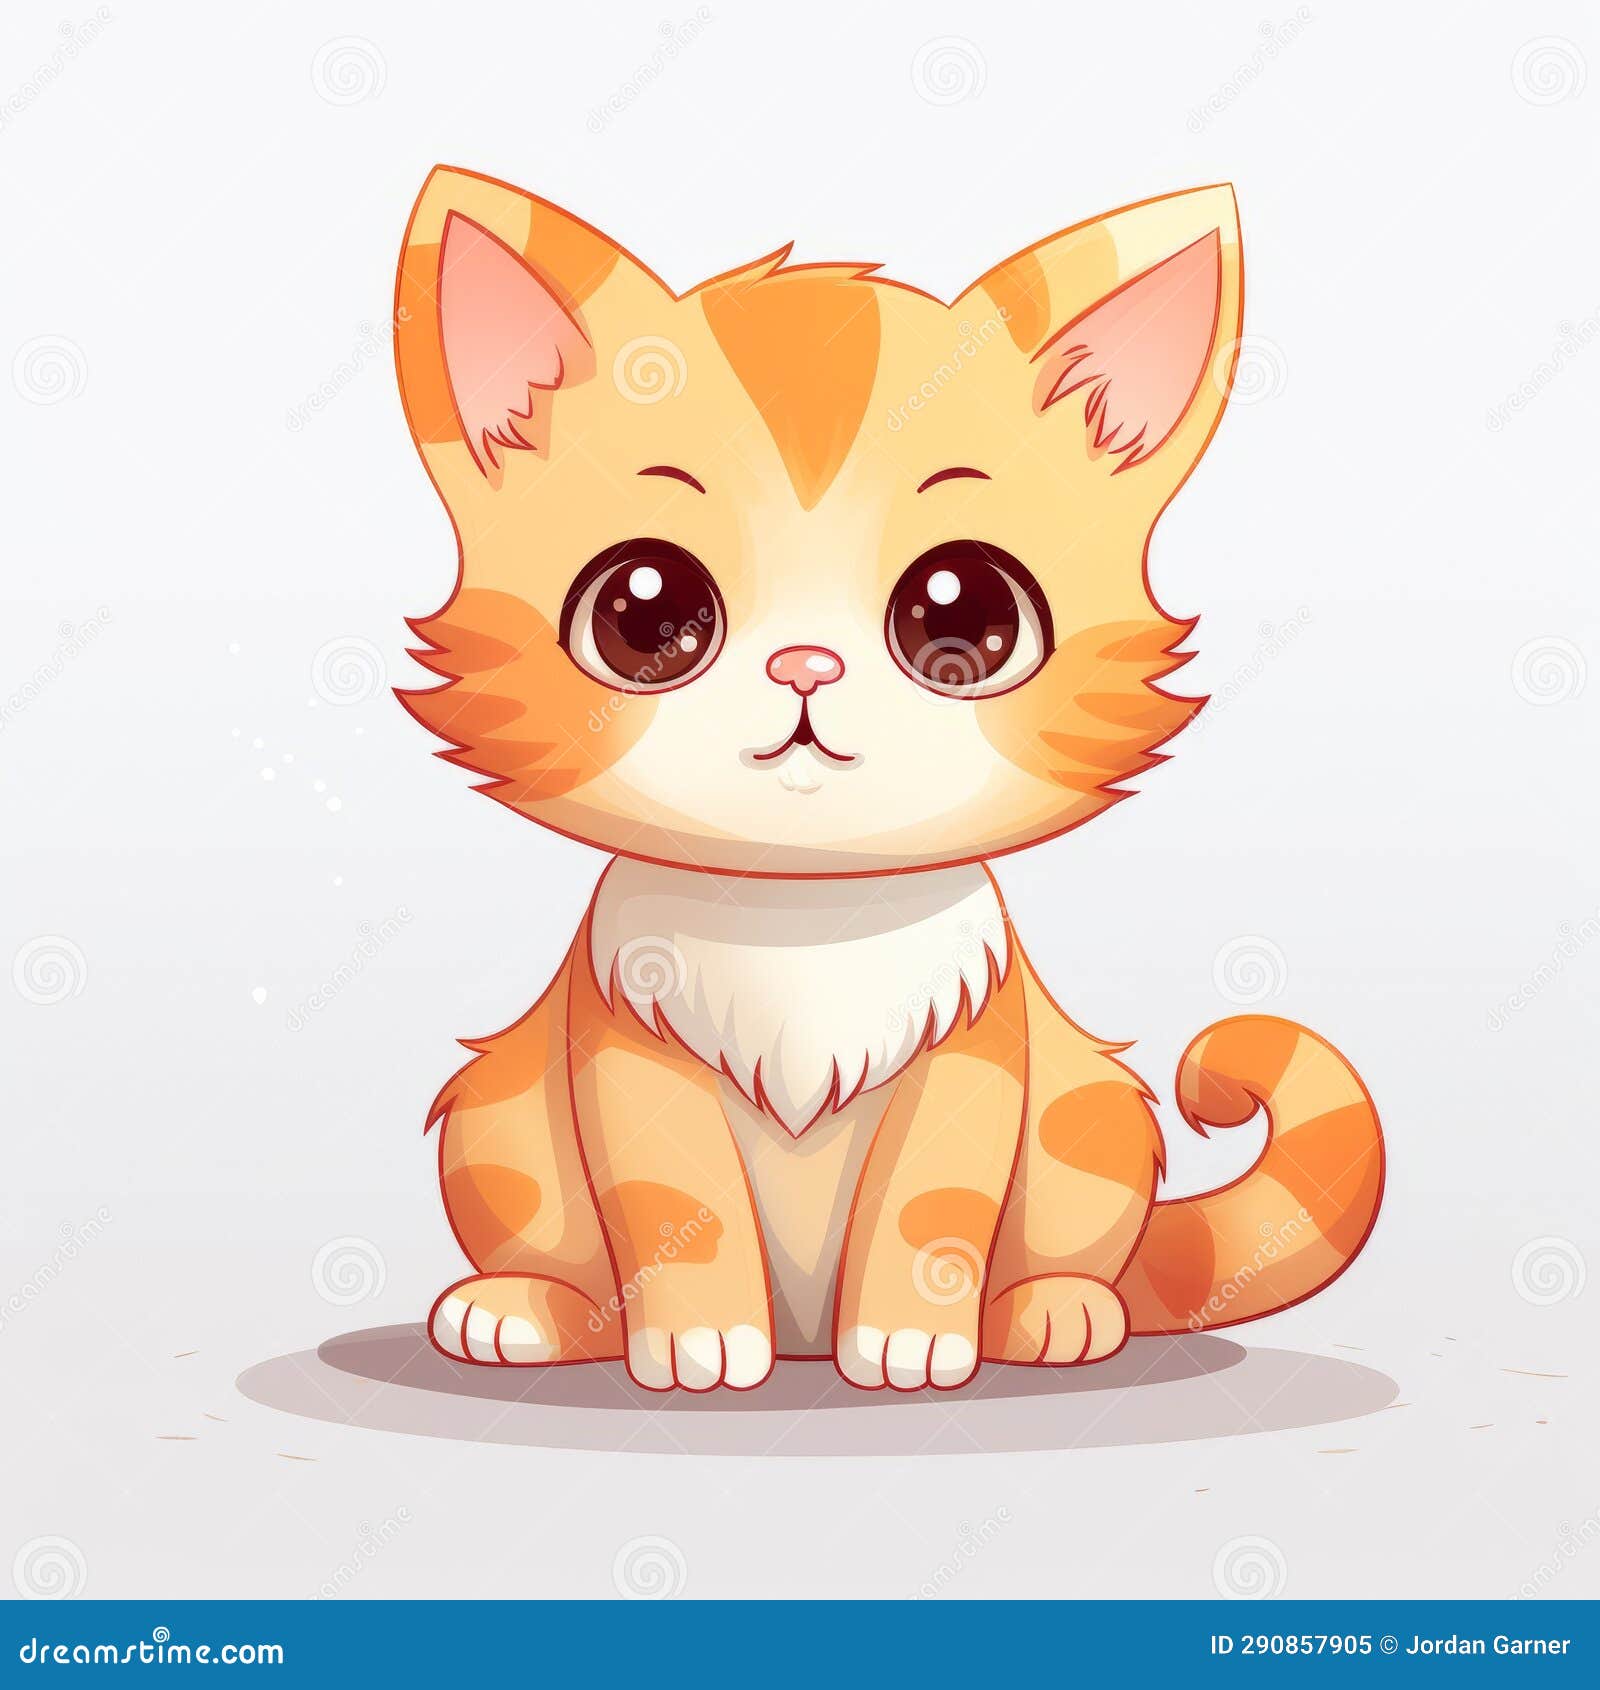 A Cartoon Orange and White Cat with Big Eyes Stock Illustration ...